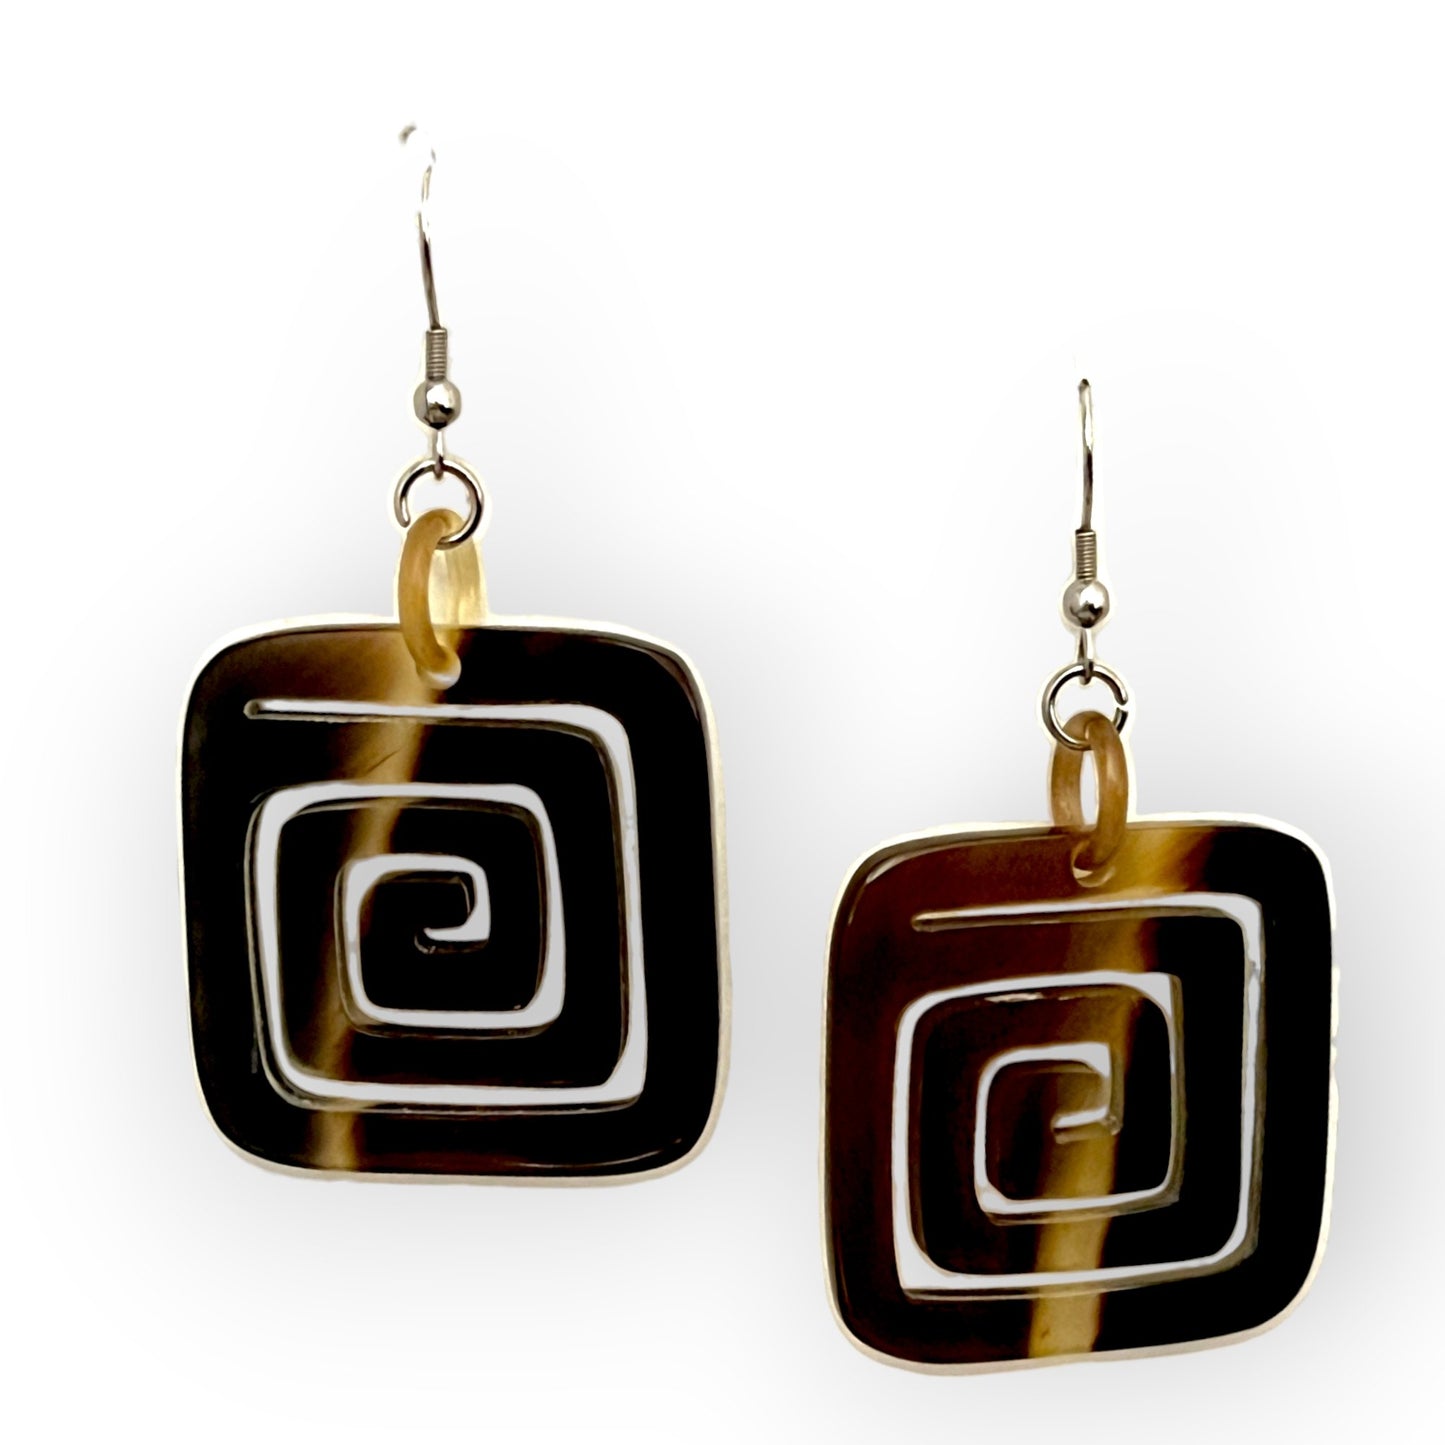 Square maze earrings in modern designs and earth tones  - Sundara Joon